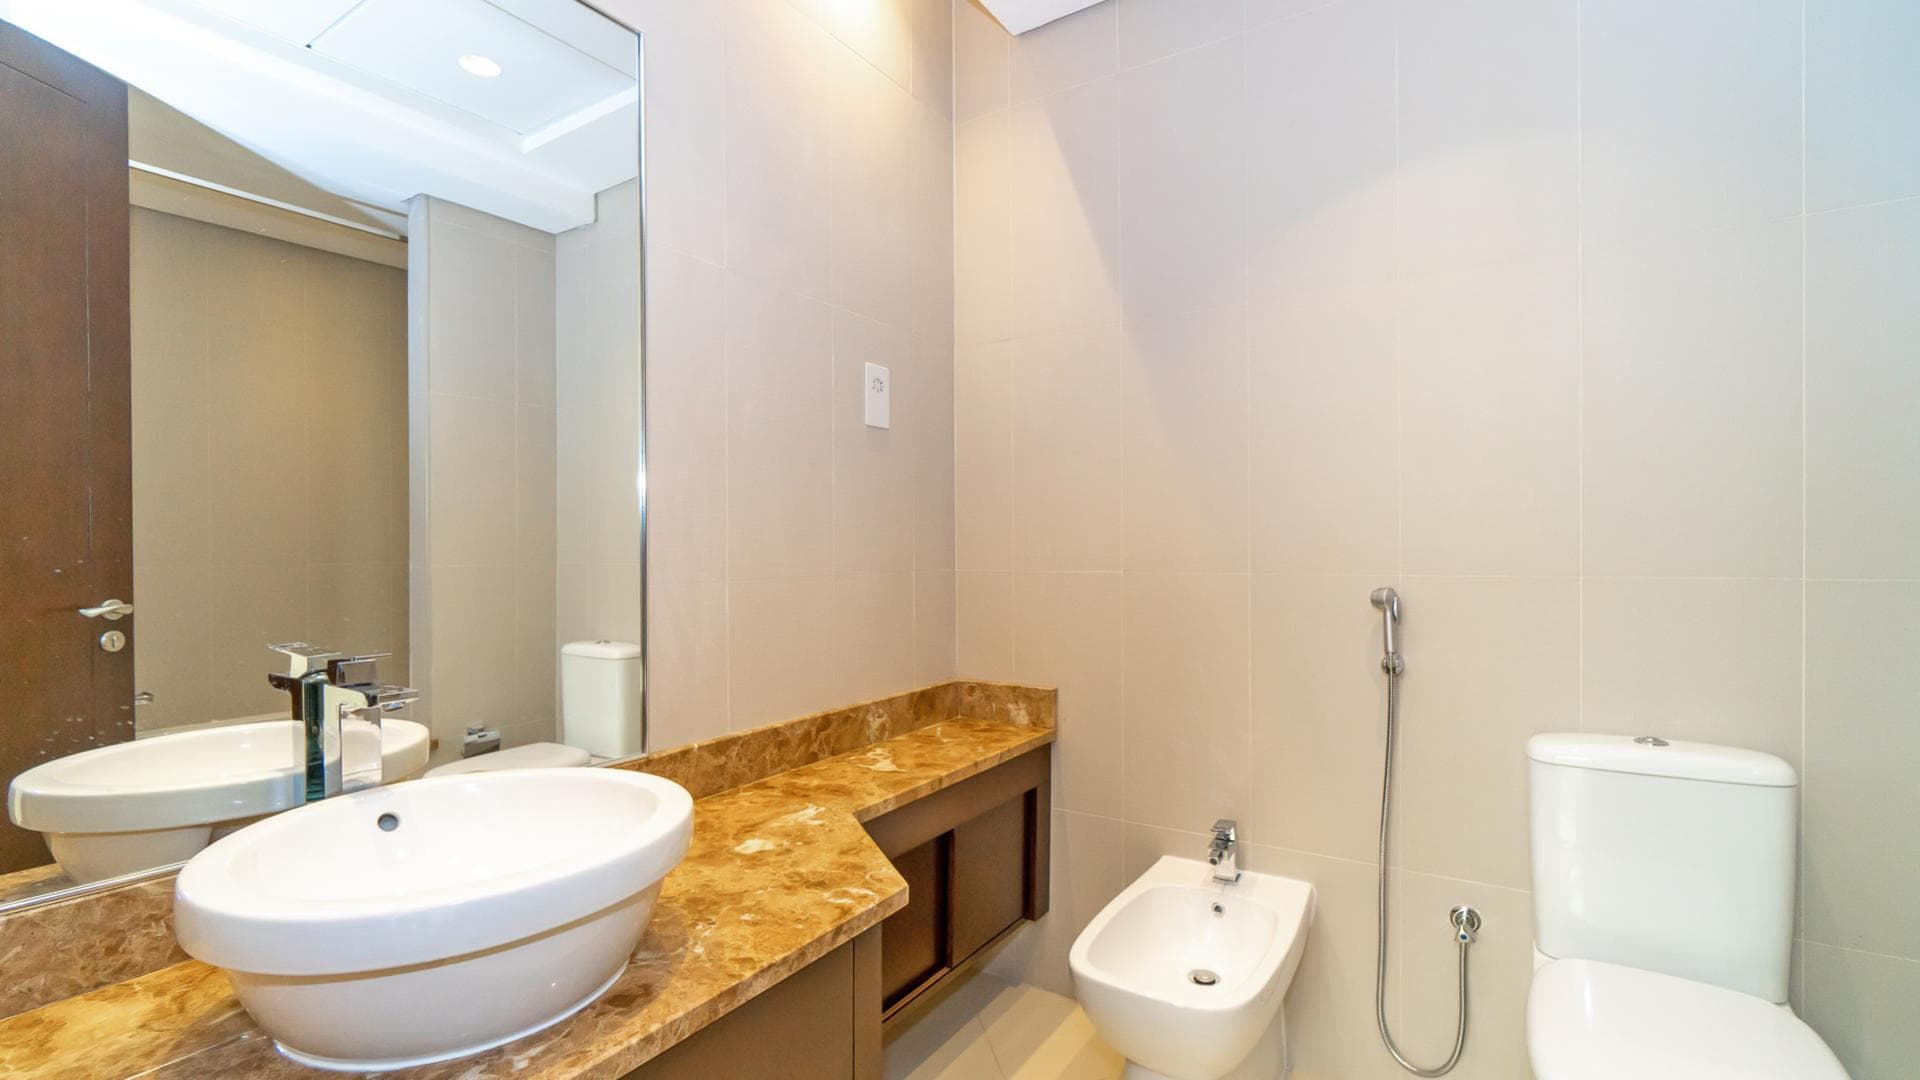 5 Bedroom Villa For Rent Meydan Gated Community Lp13586 7b89dbb1bd7d840.jpg